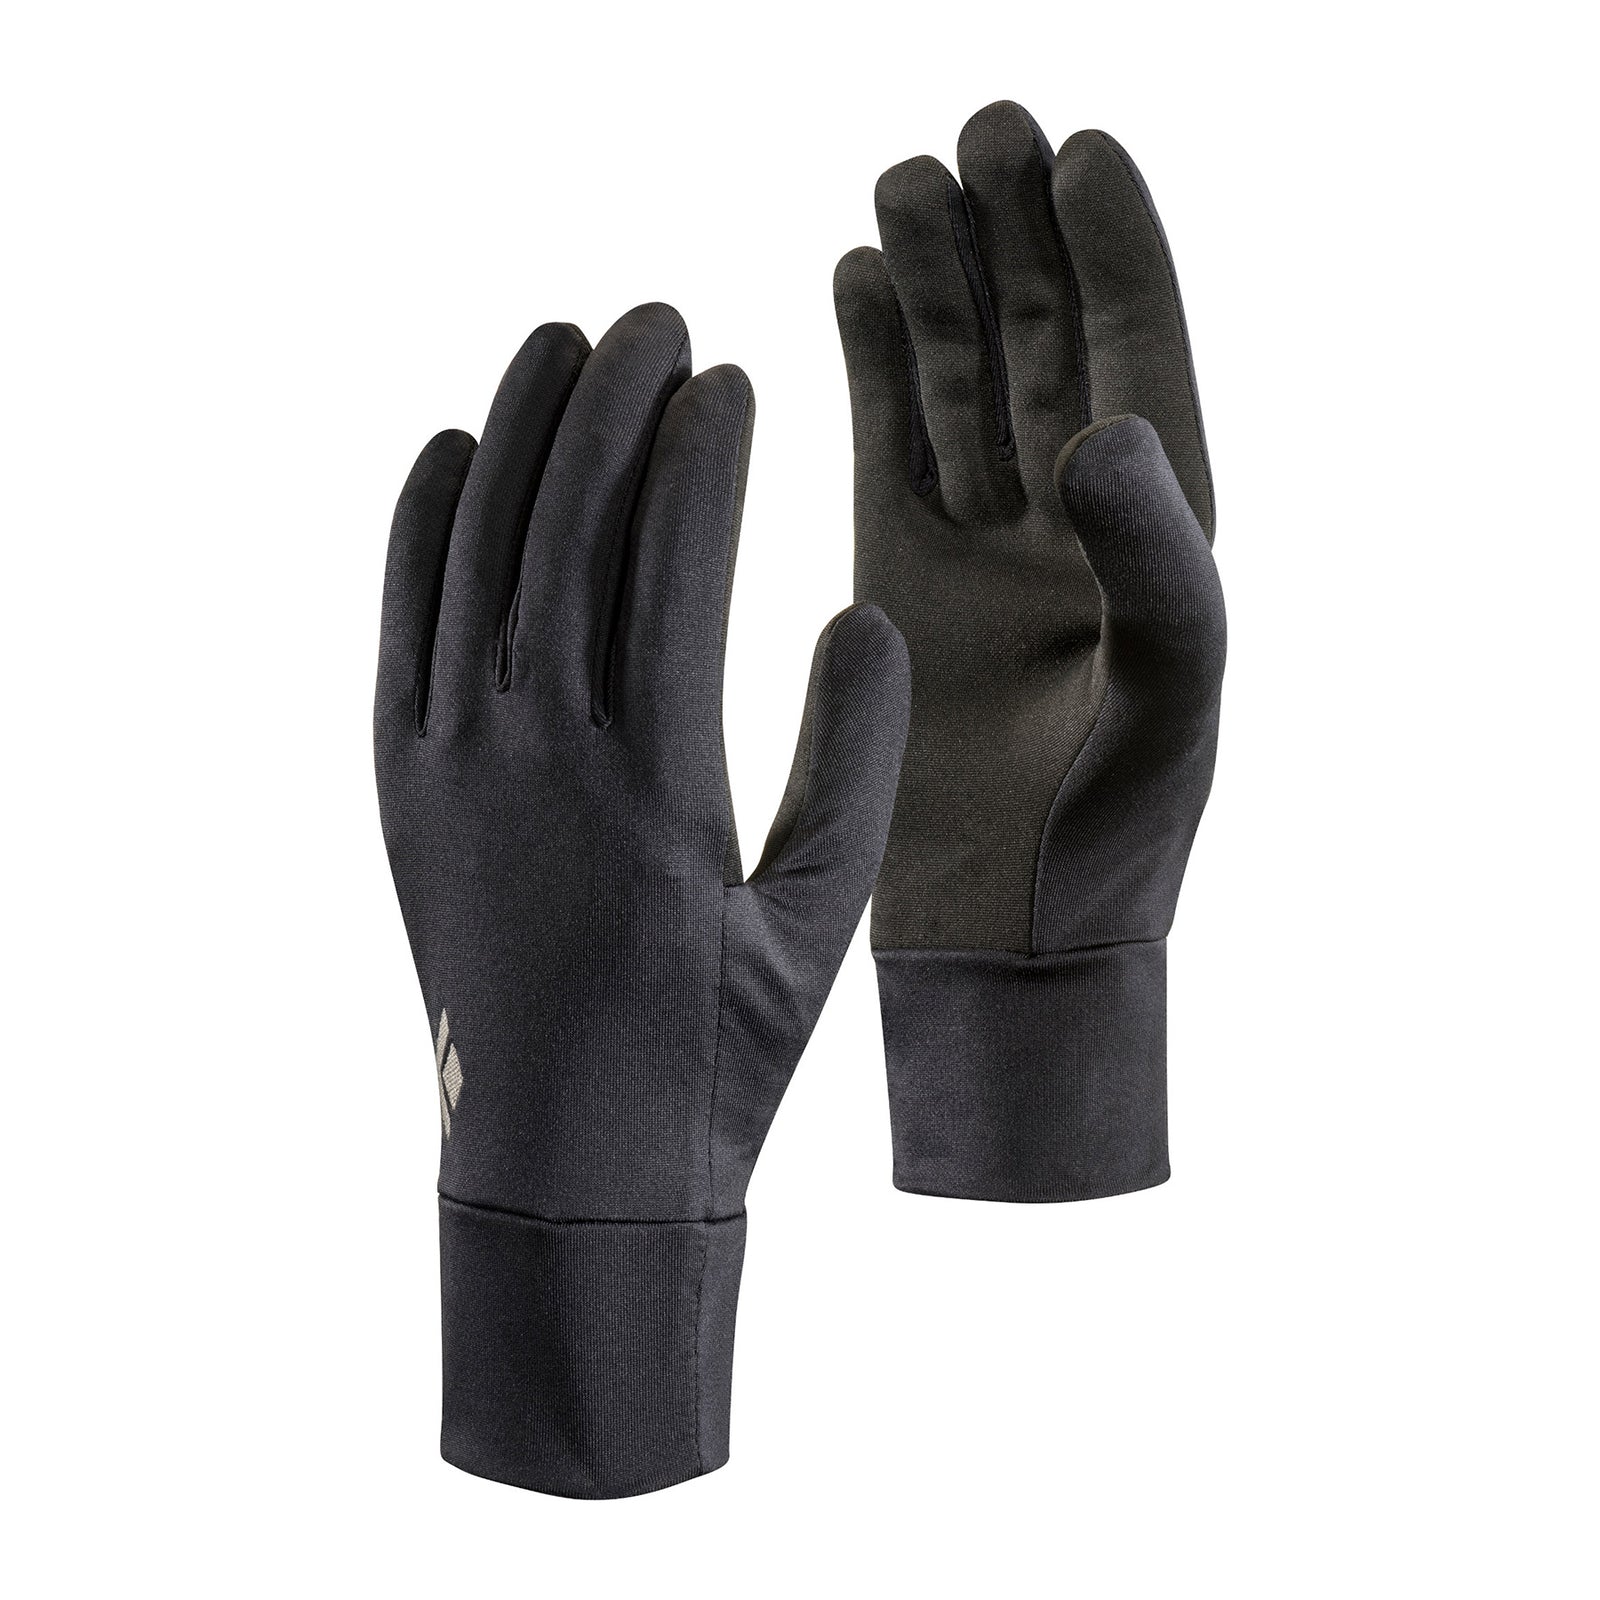 a lightweight pair of black gloves